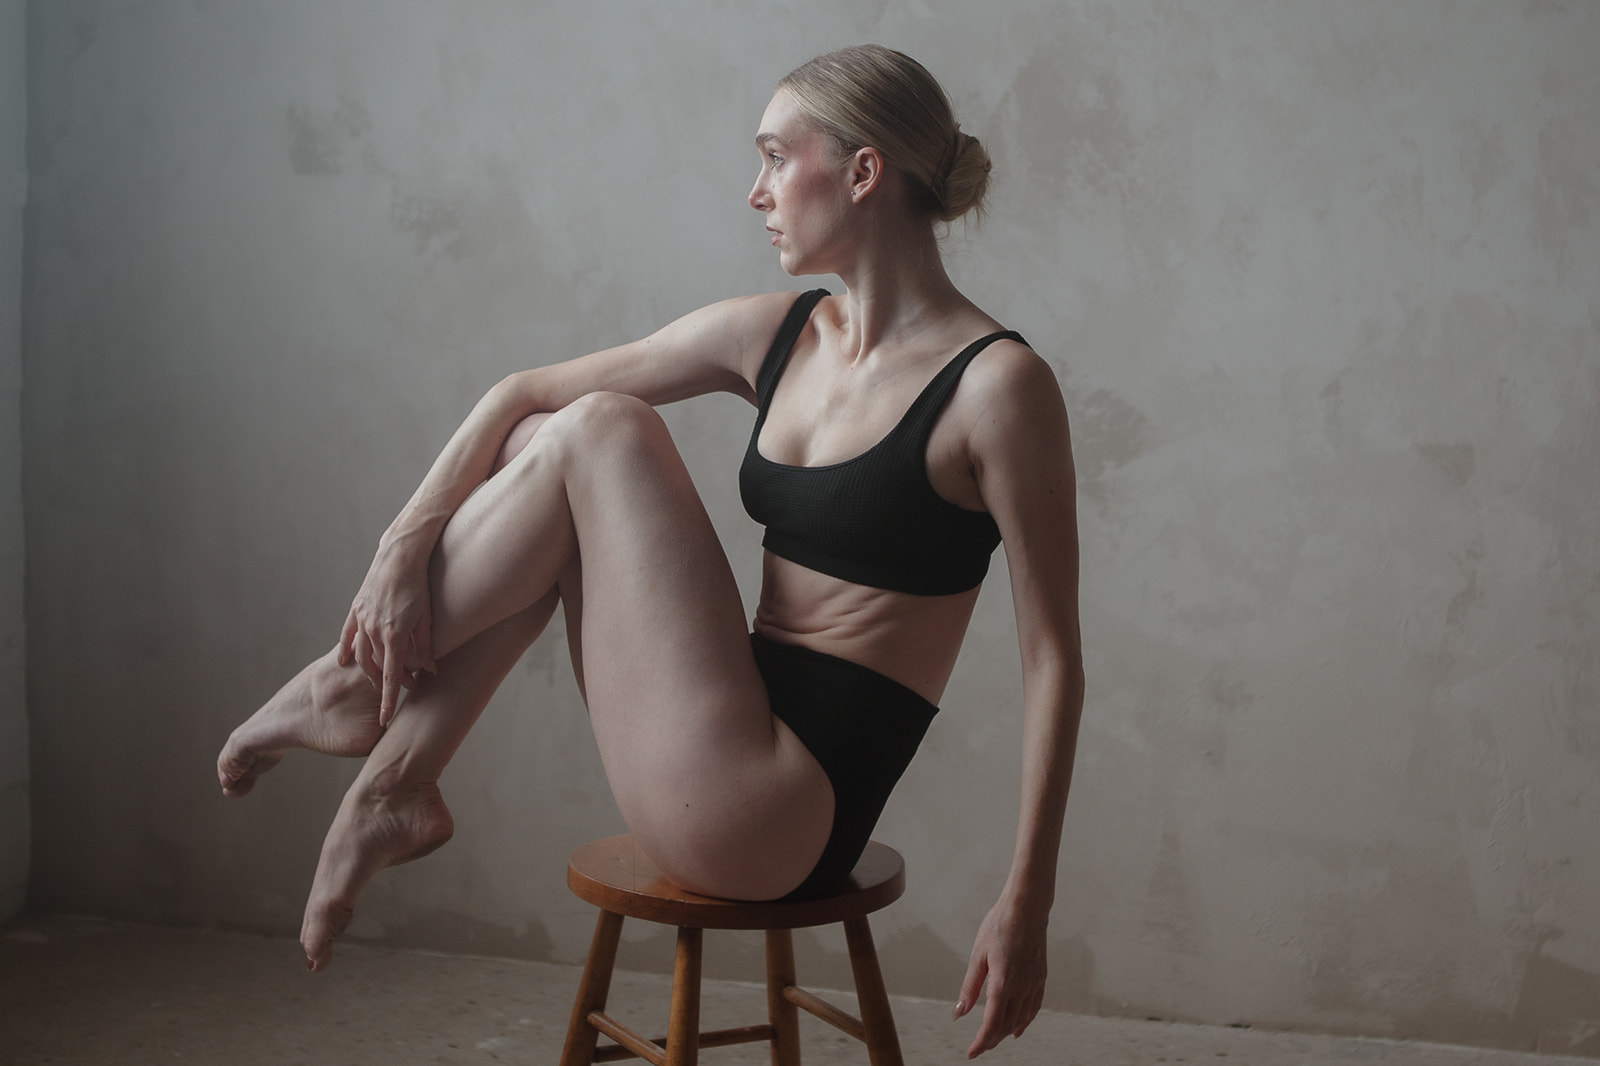 Photoshoot of a ballet dancer at Field Work Toronto